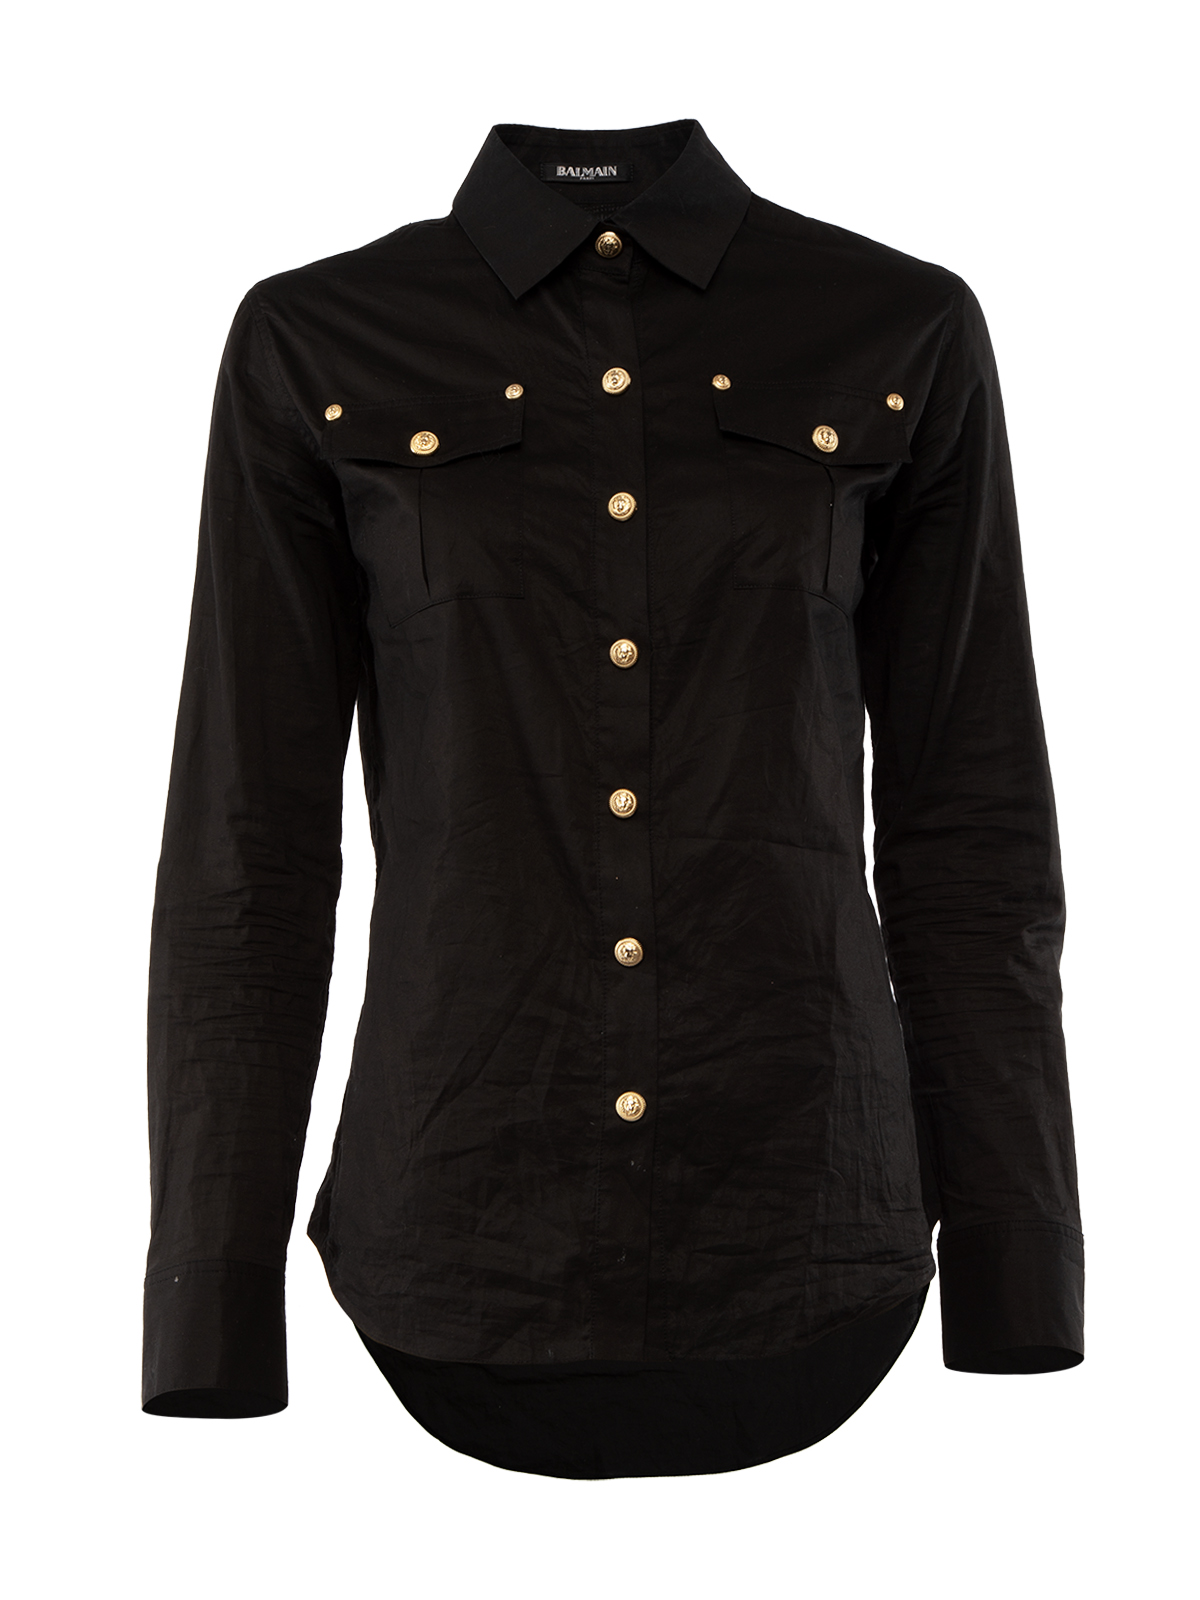 Balmain Black Cotton Shirt